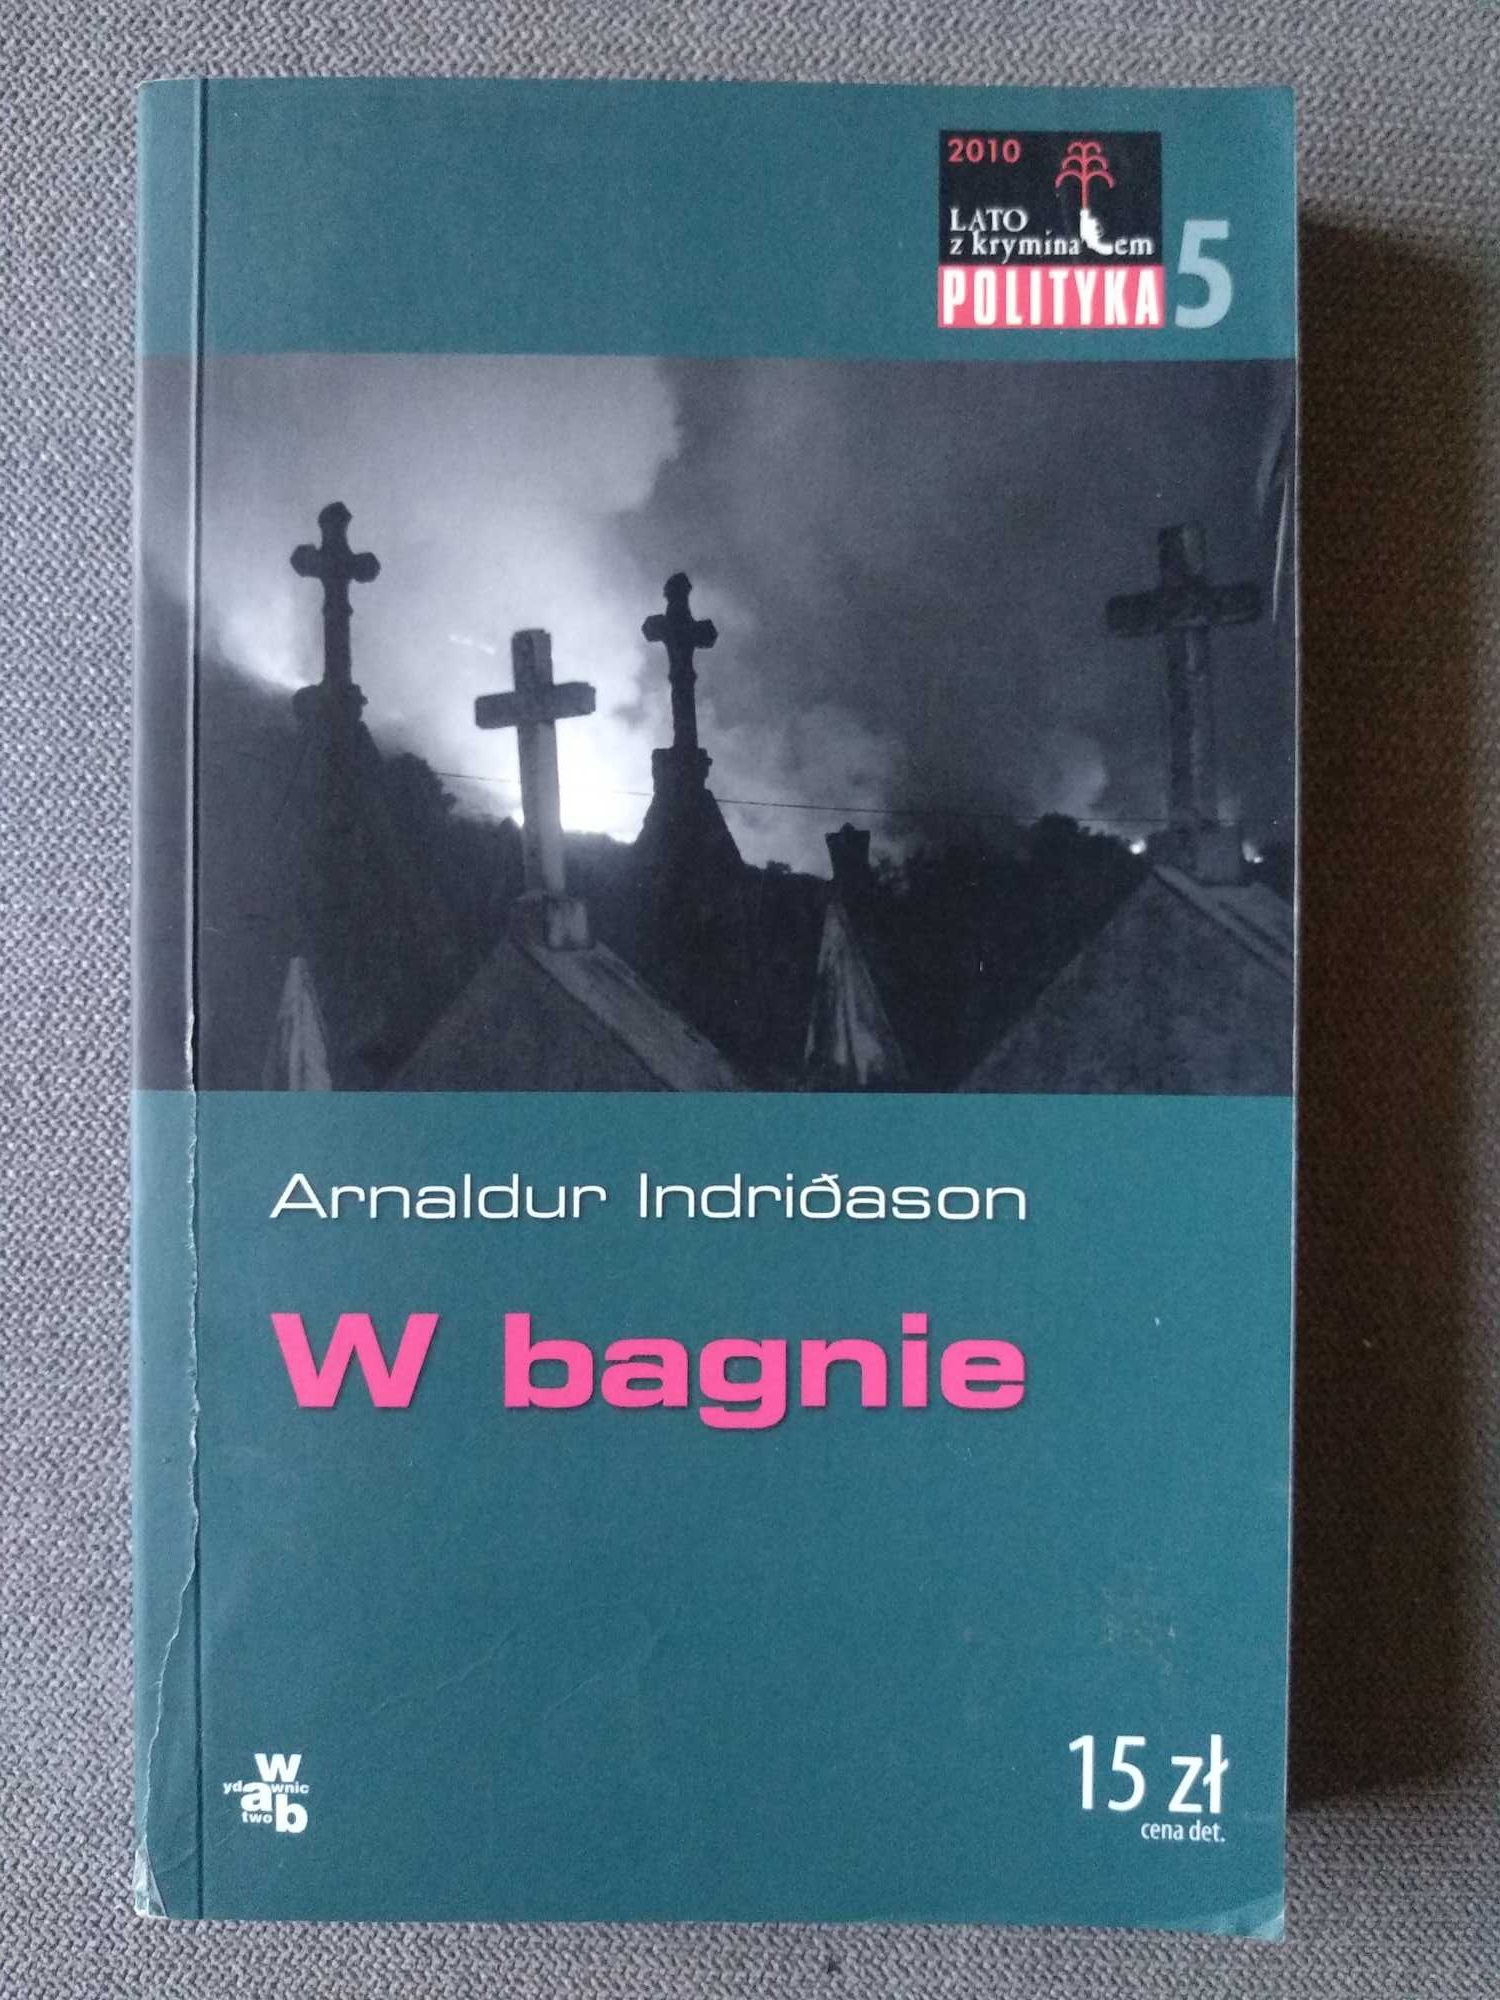 Książka "W bagnie" - Arnaldur Indridason